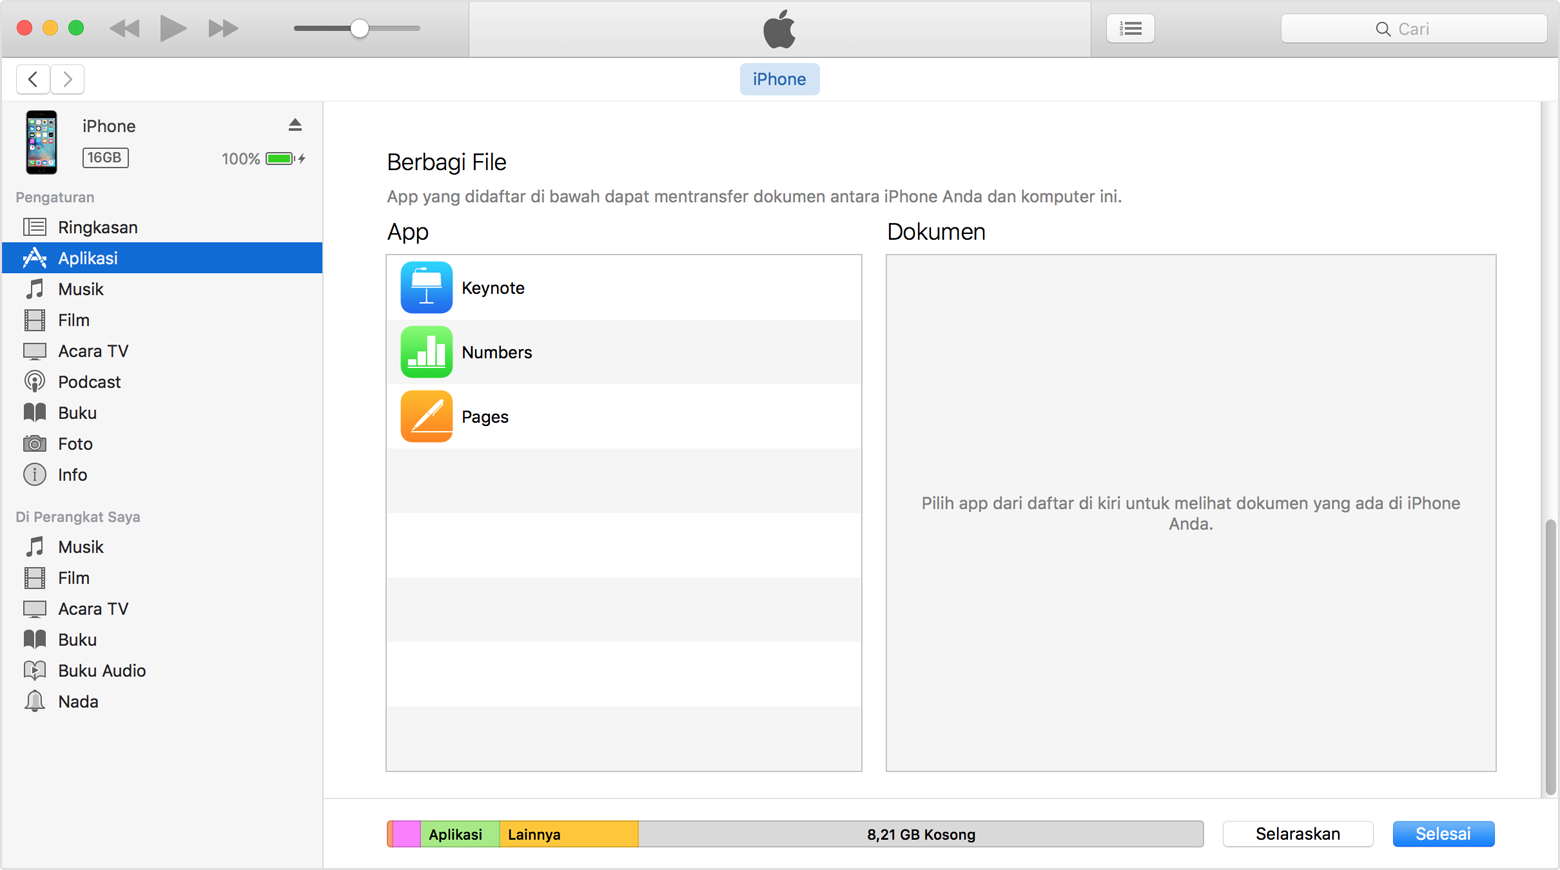 FilelistCreator 23.6.13 instal the last version for ipod